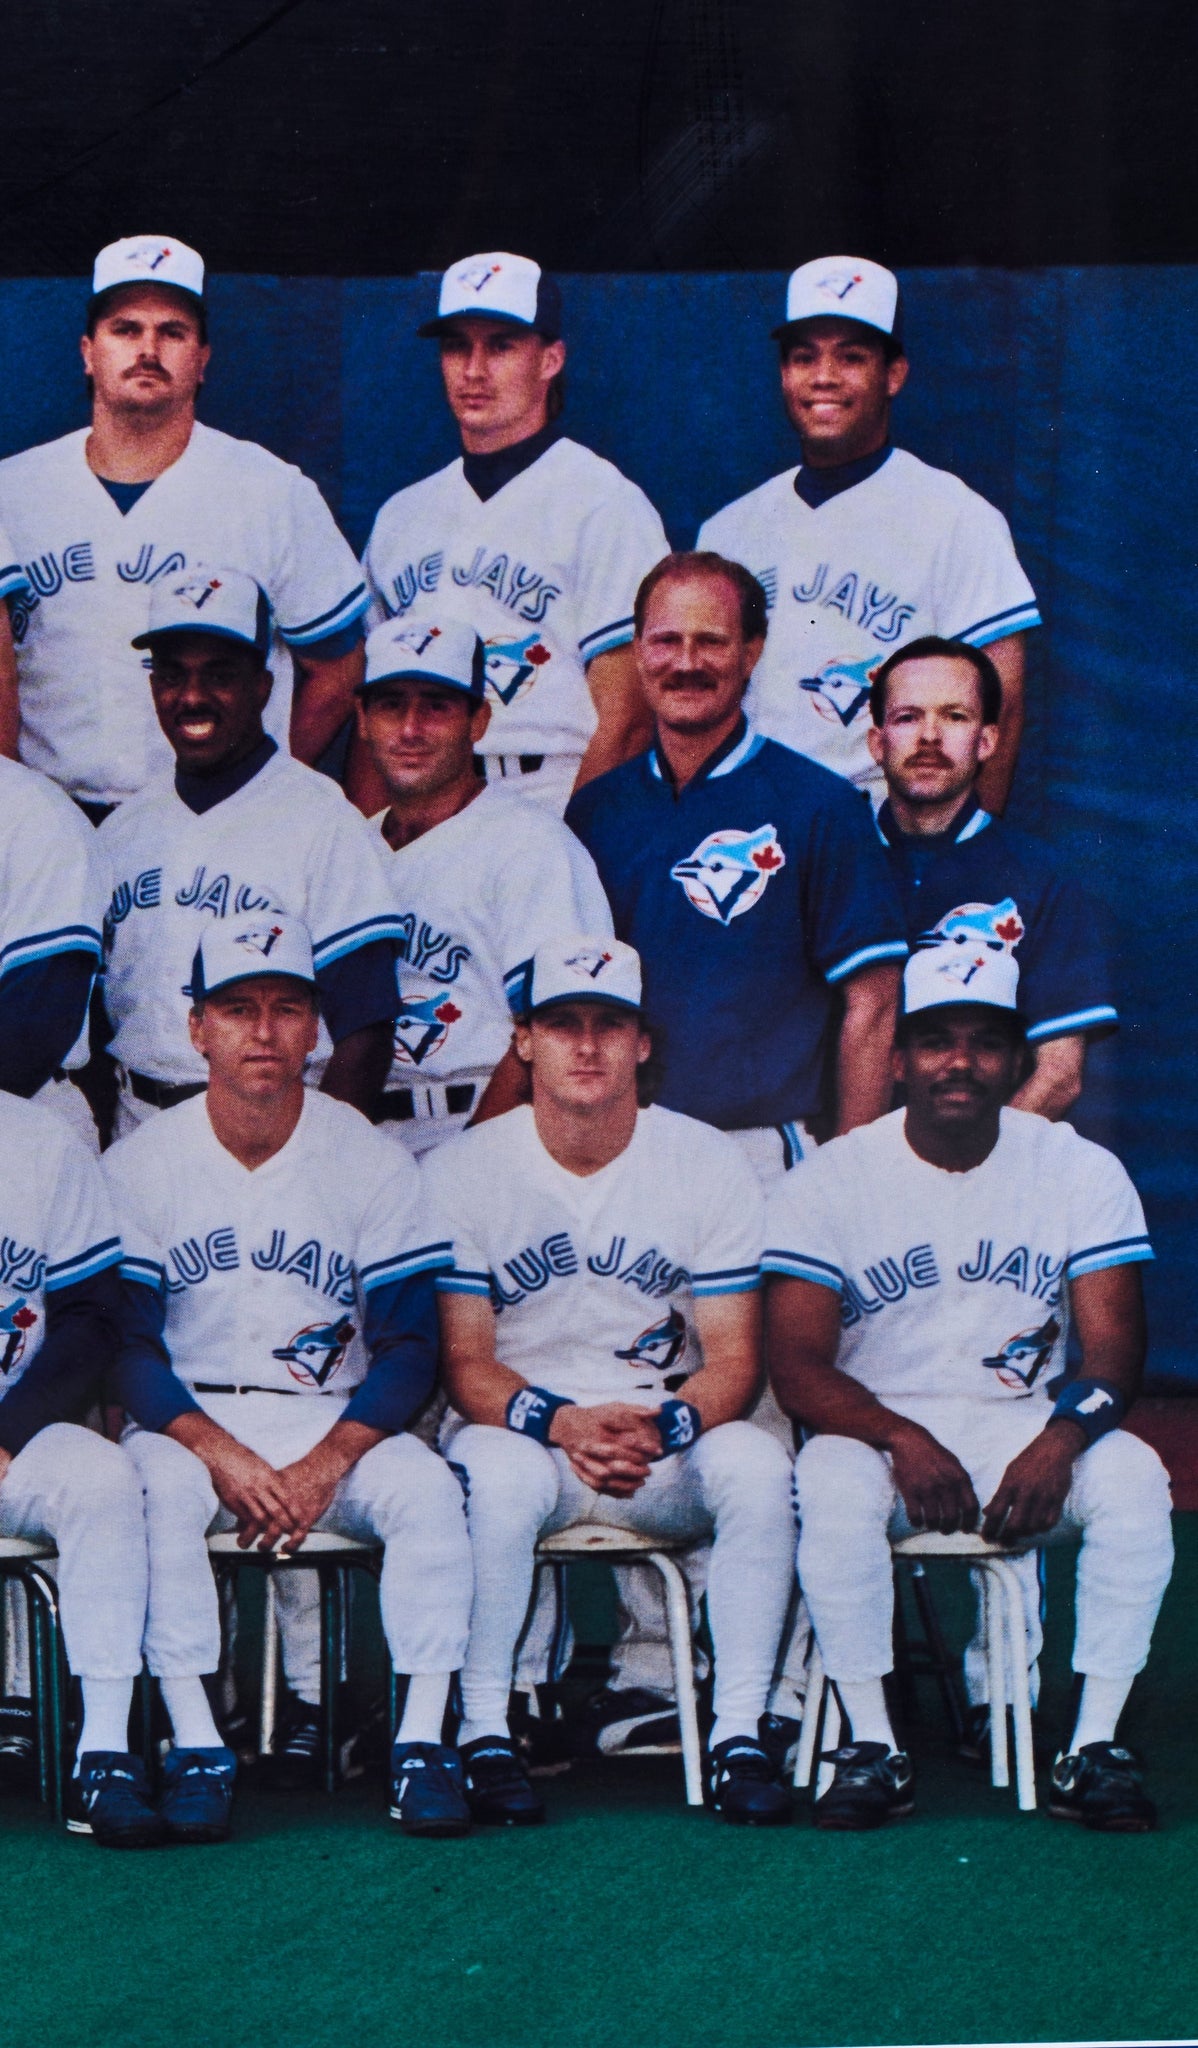 1992 Toronto Blue Jays World Series Champions Commemorative 2 Pack